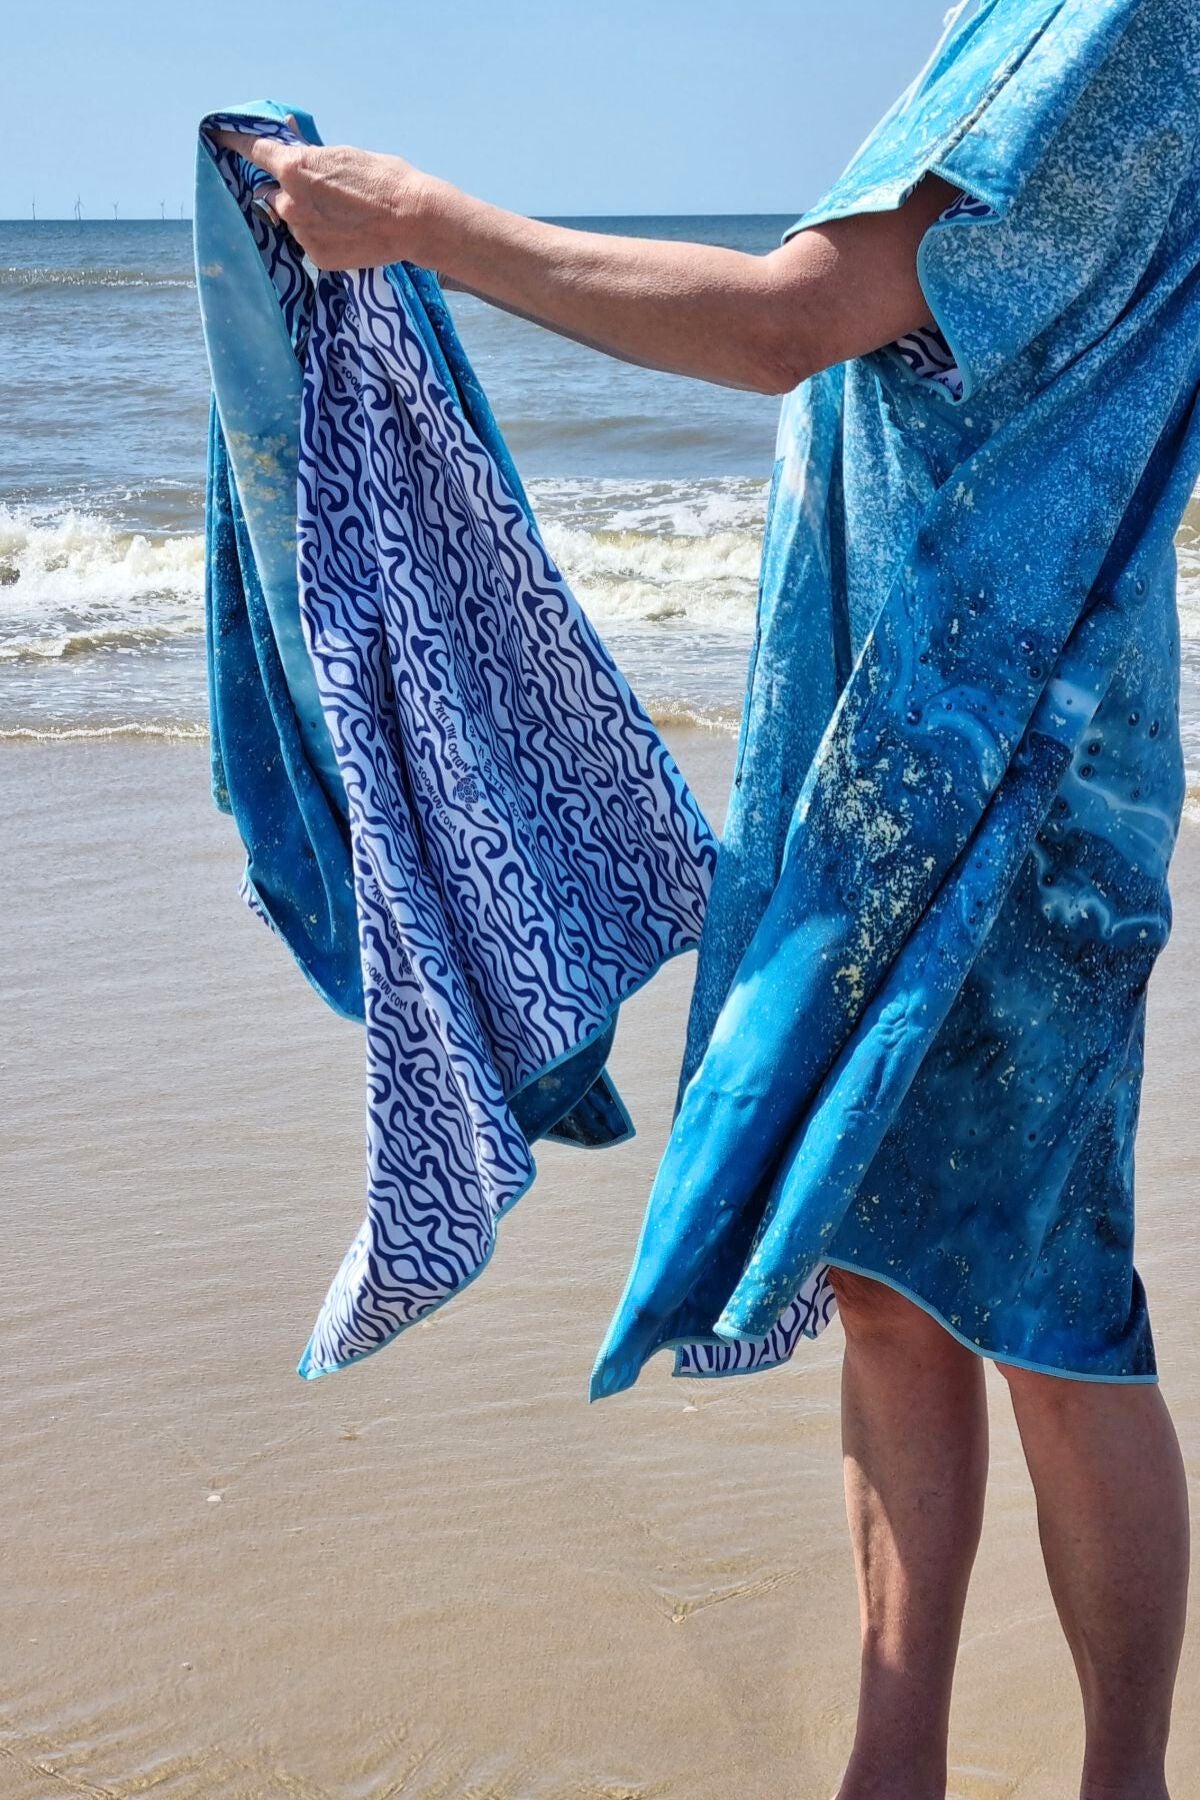 Quick-Drying Travel Towel or Beach Towel 'OCEAN' – 100 x 160